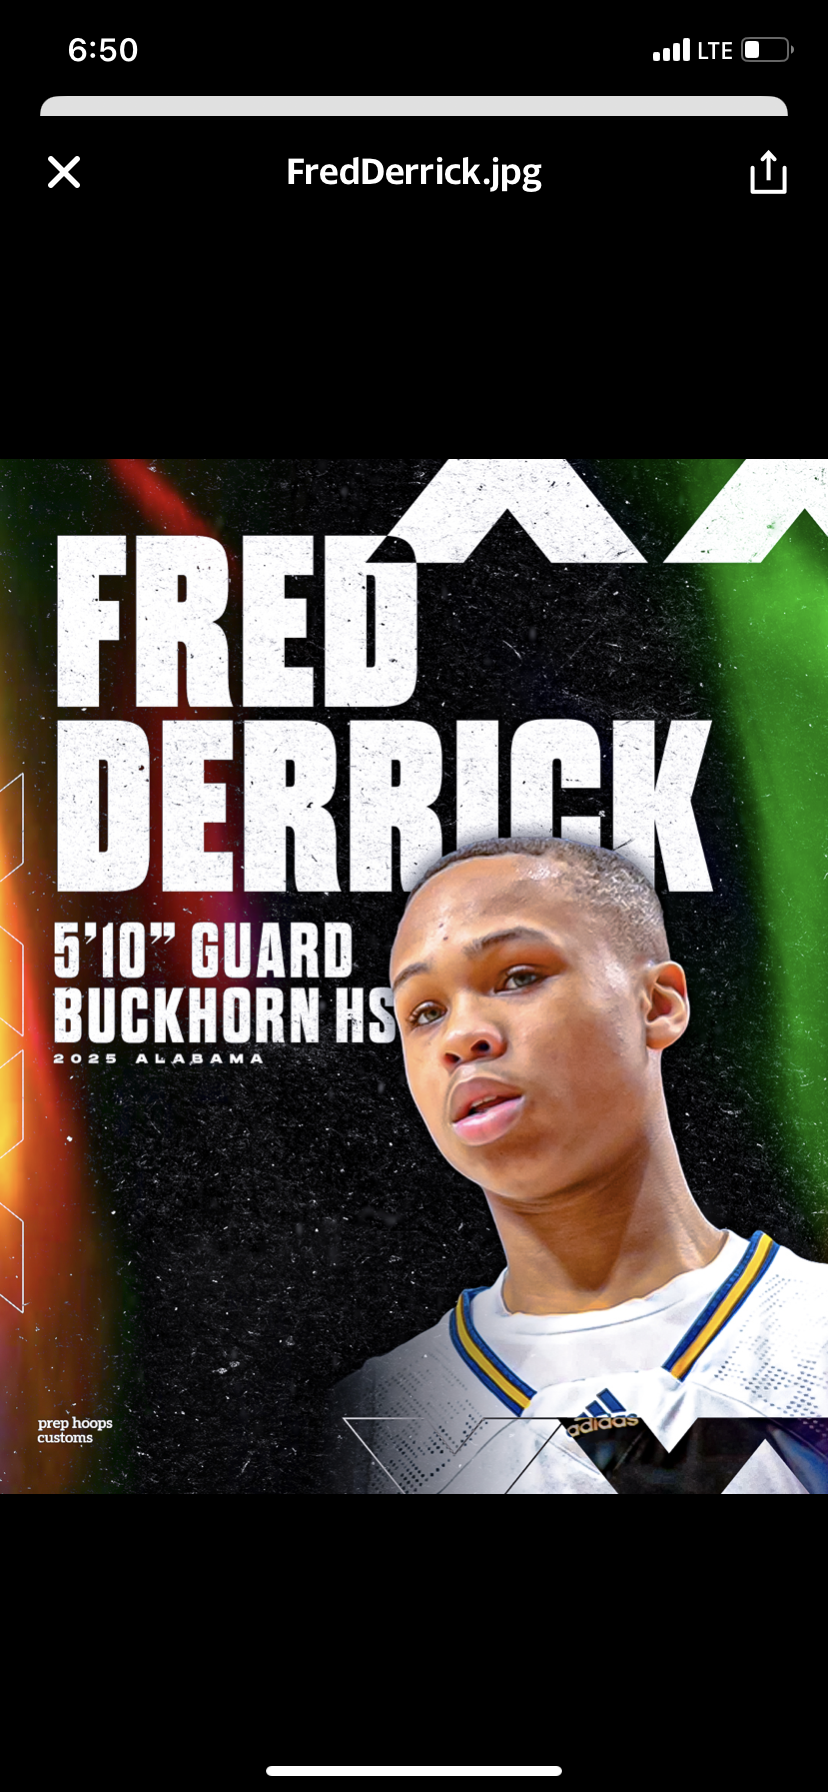 Fred Derrick